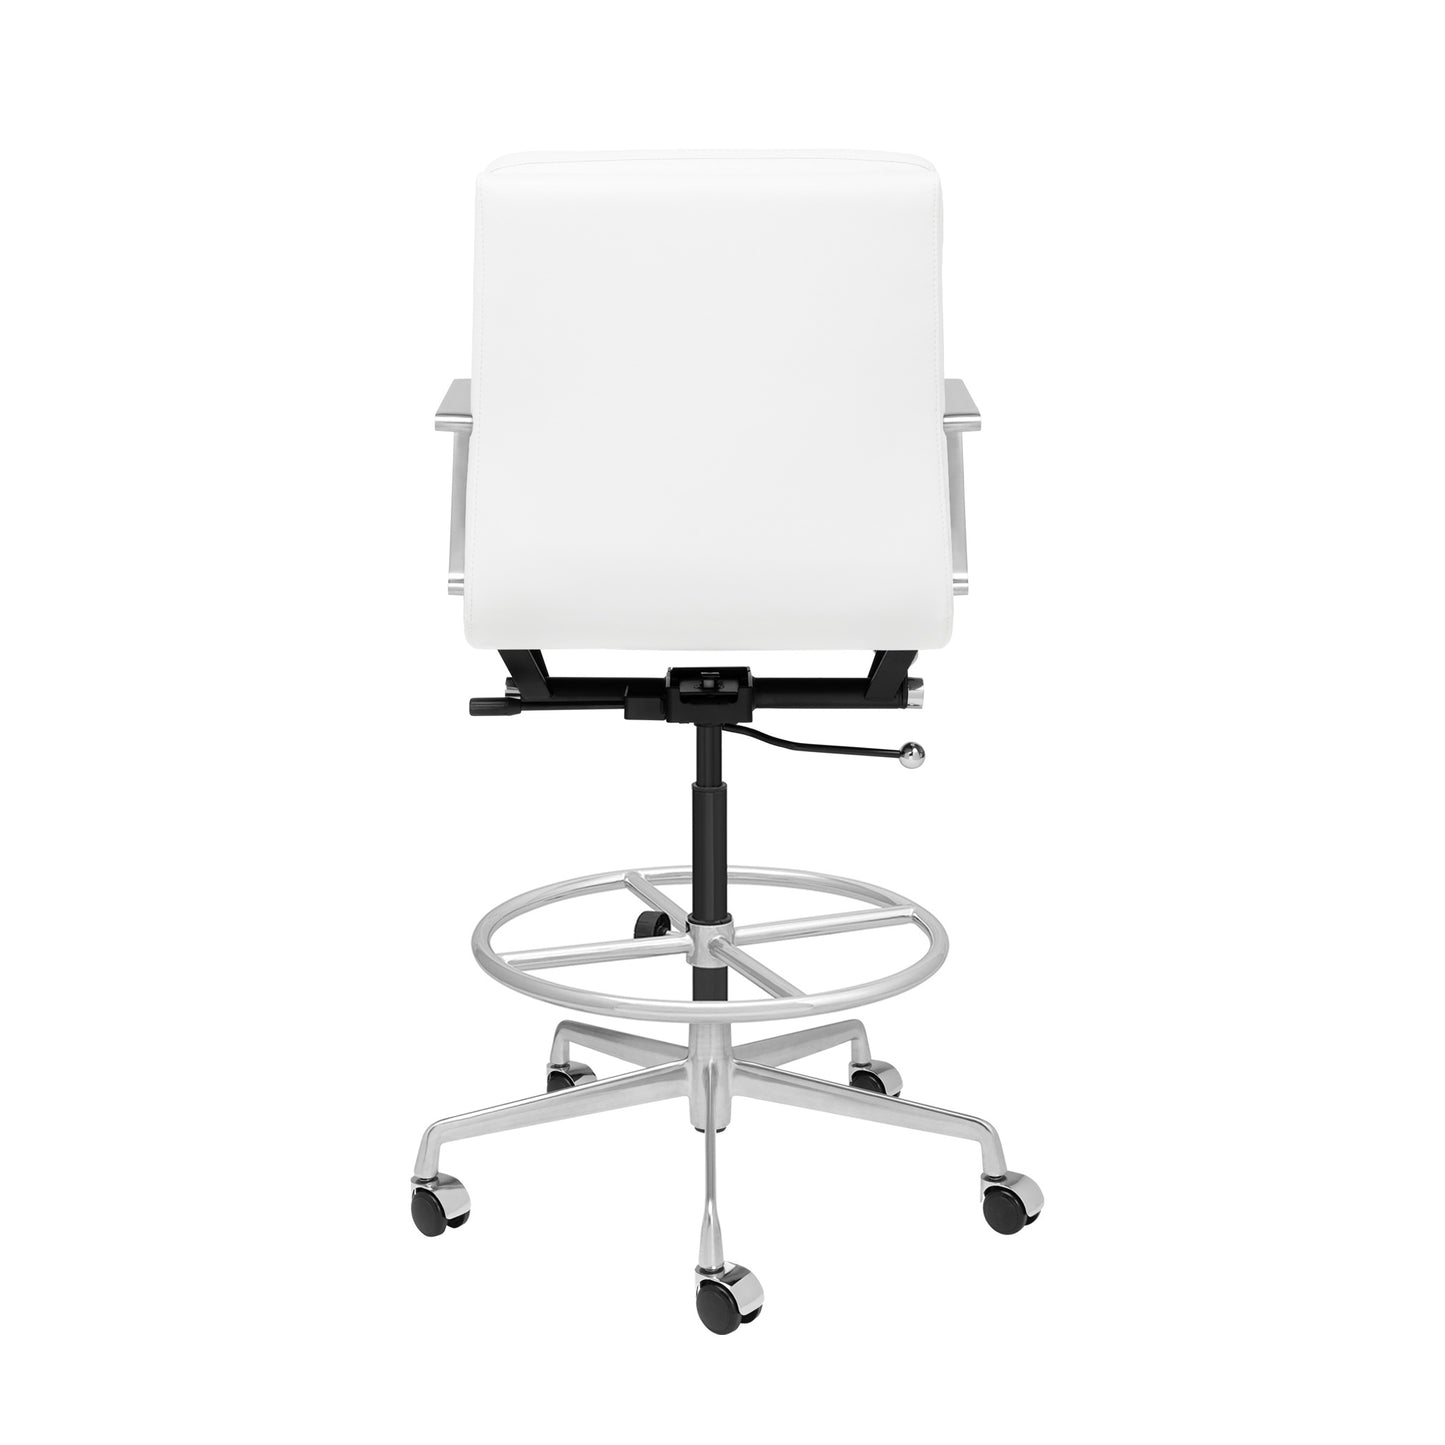 SHIPS MAY 7TH - SOHO II Padded Drafting Chair (White)